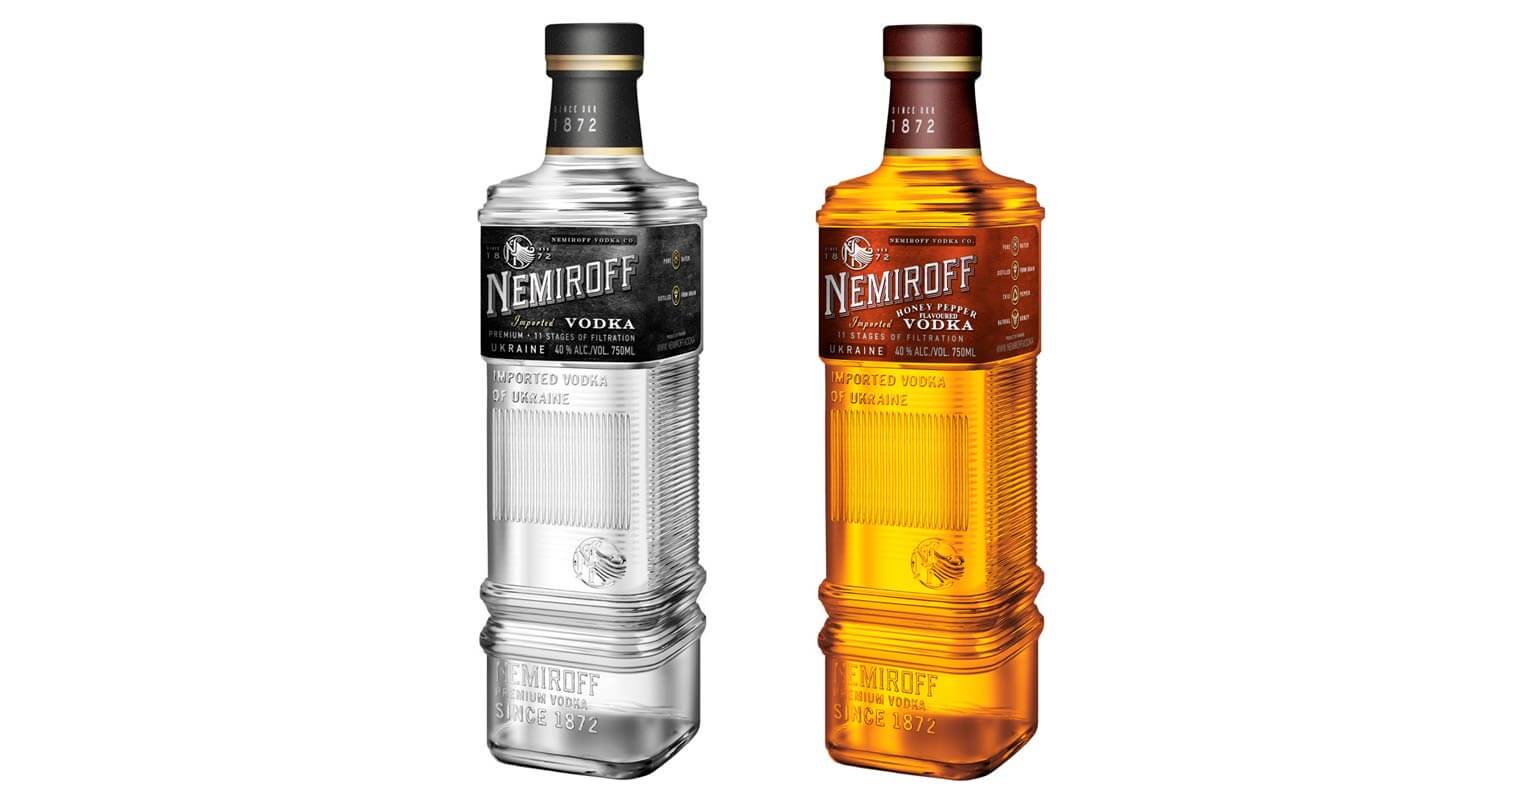 Nemiroff Original and Honey Pepper Vodka, bottles on white, featured image